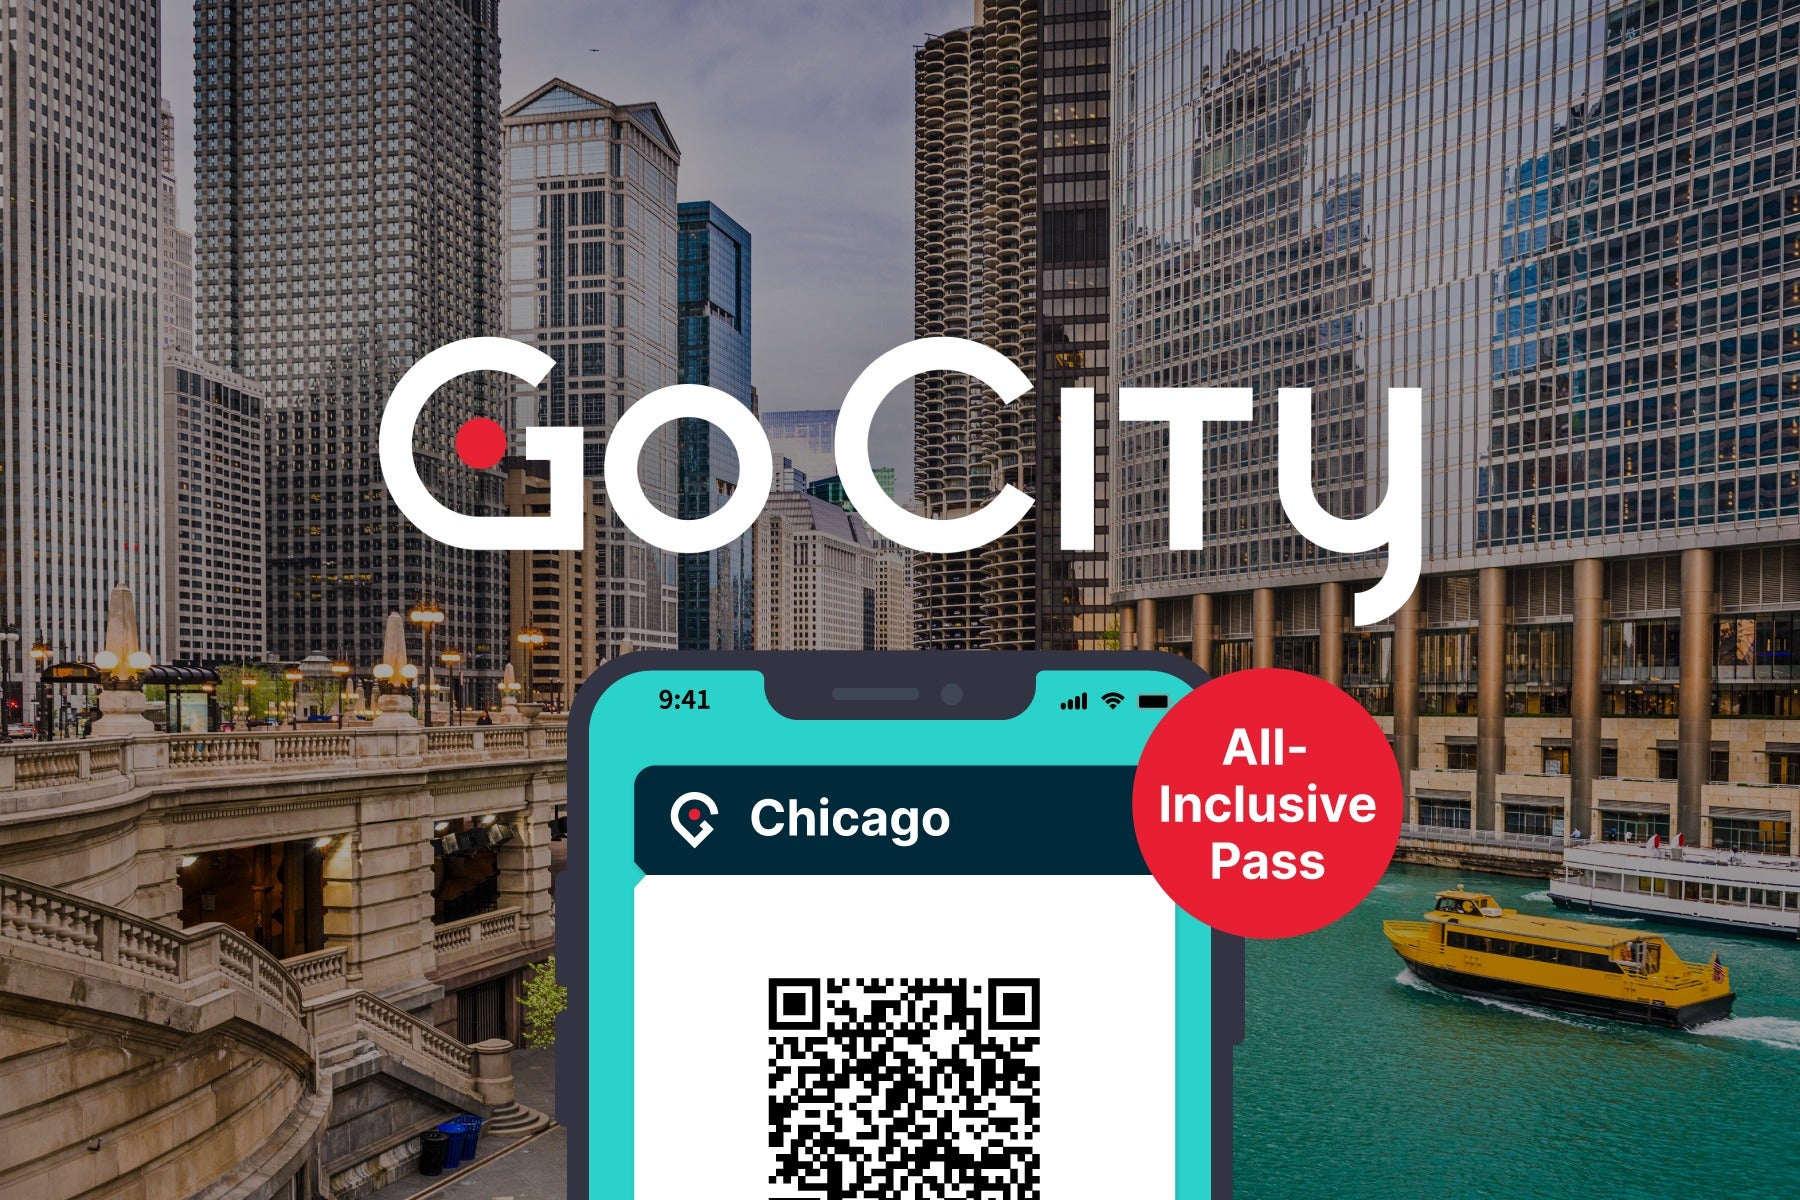 Go City: Chicago All-Inclusive Pass